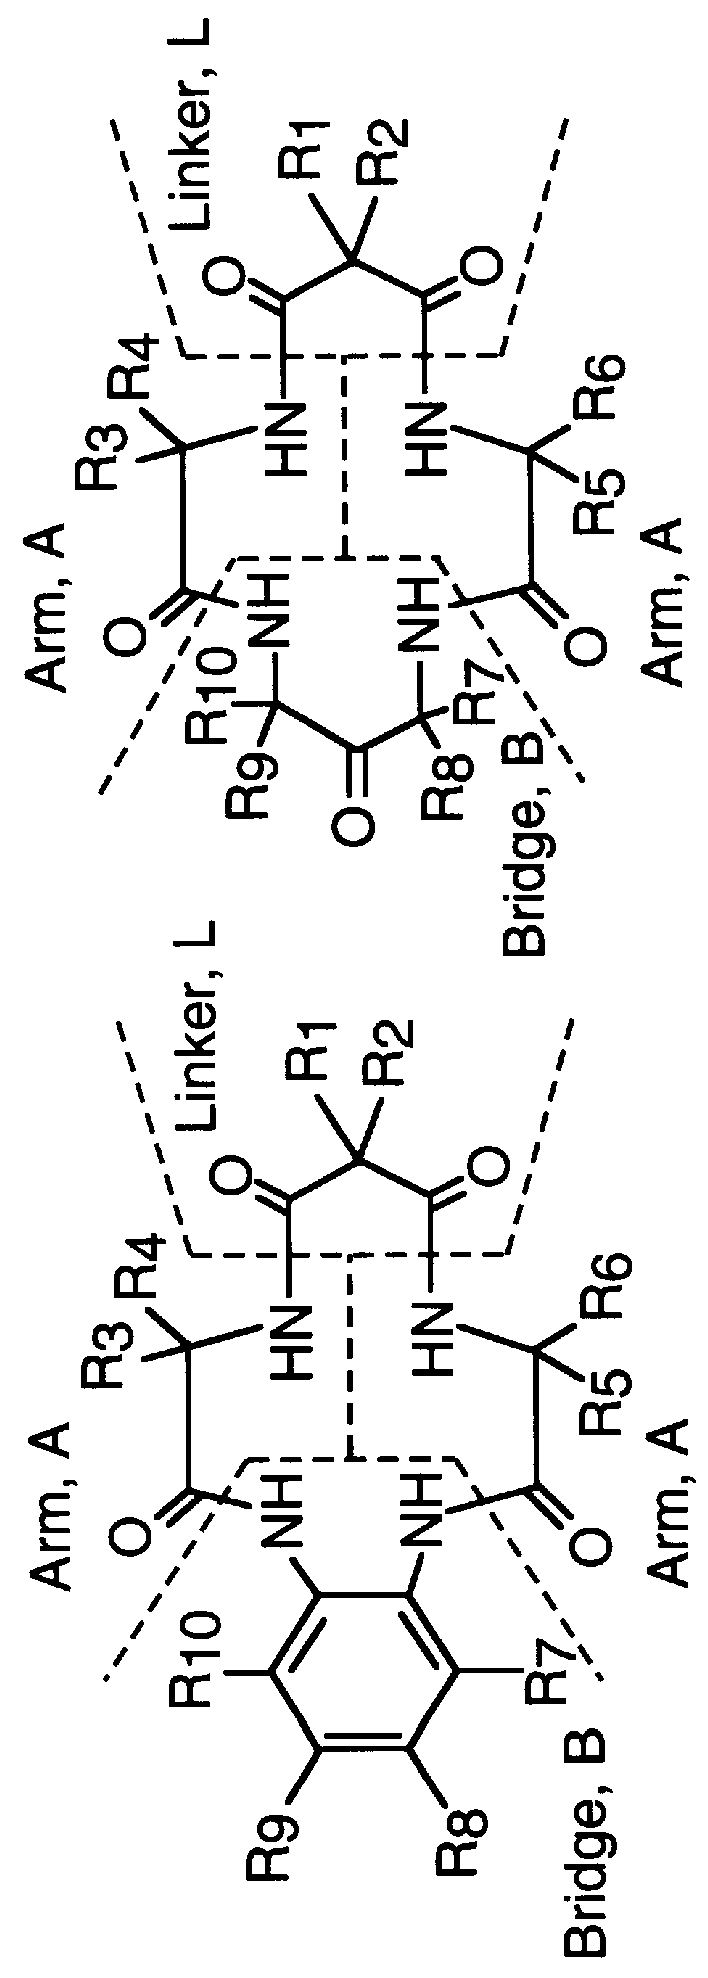 Synthesis of macrocyclic tetraamido-N ligands